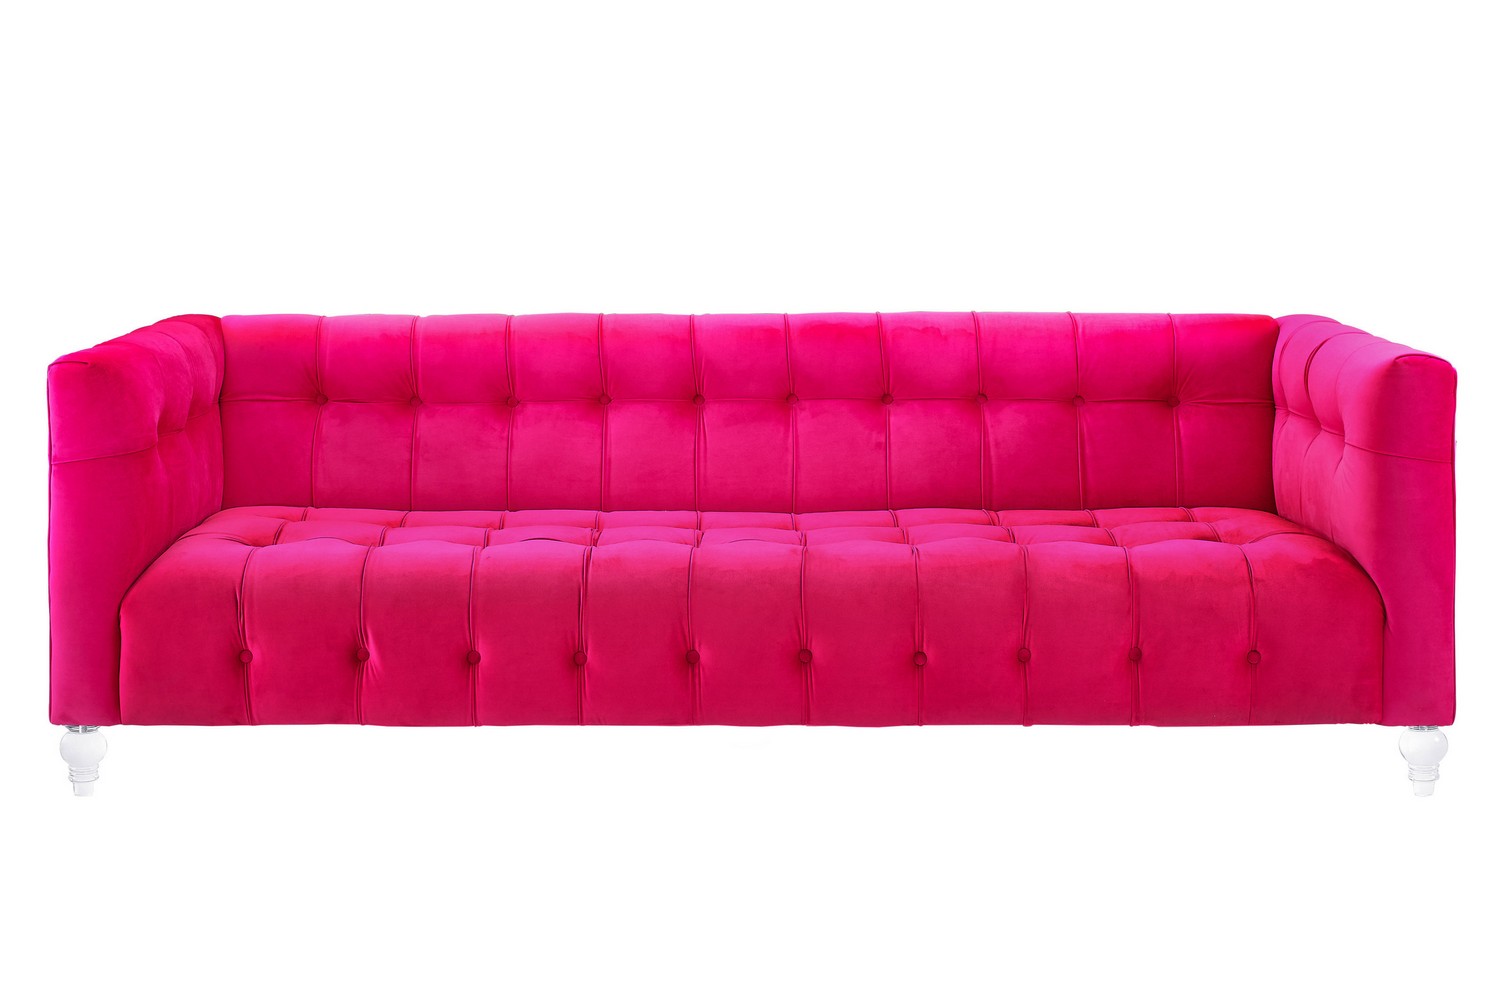 TOV Furniture Bea Pink Velvet Sofa